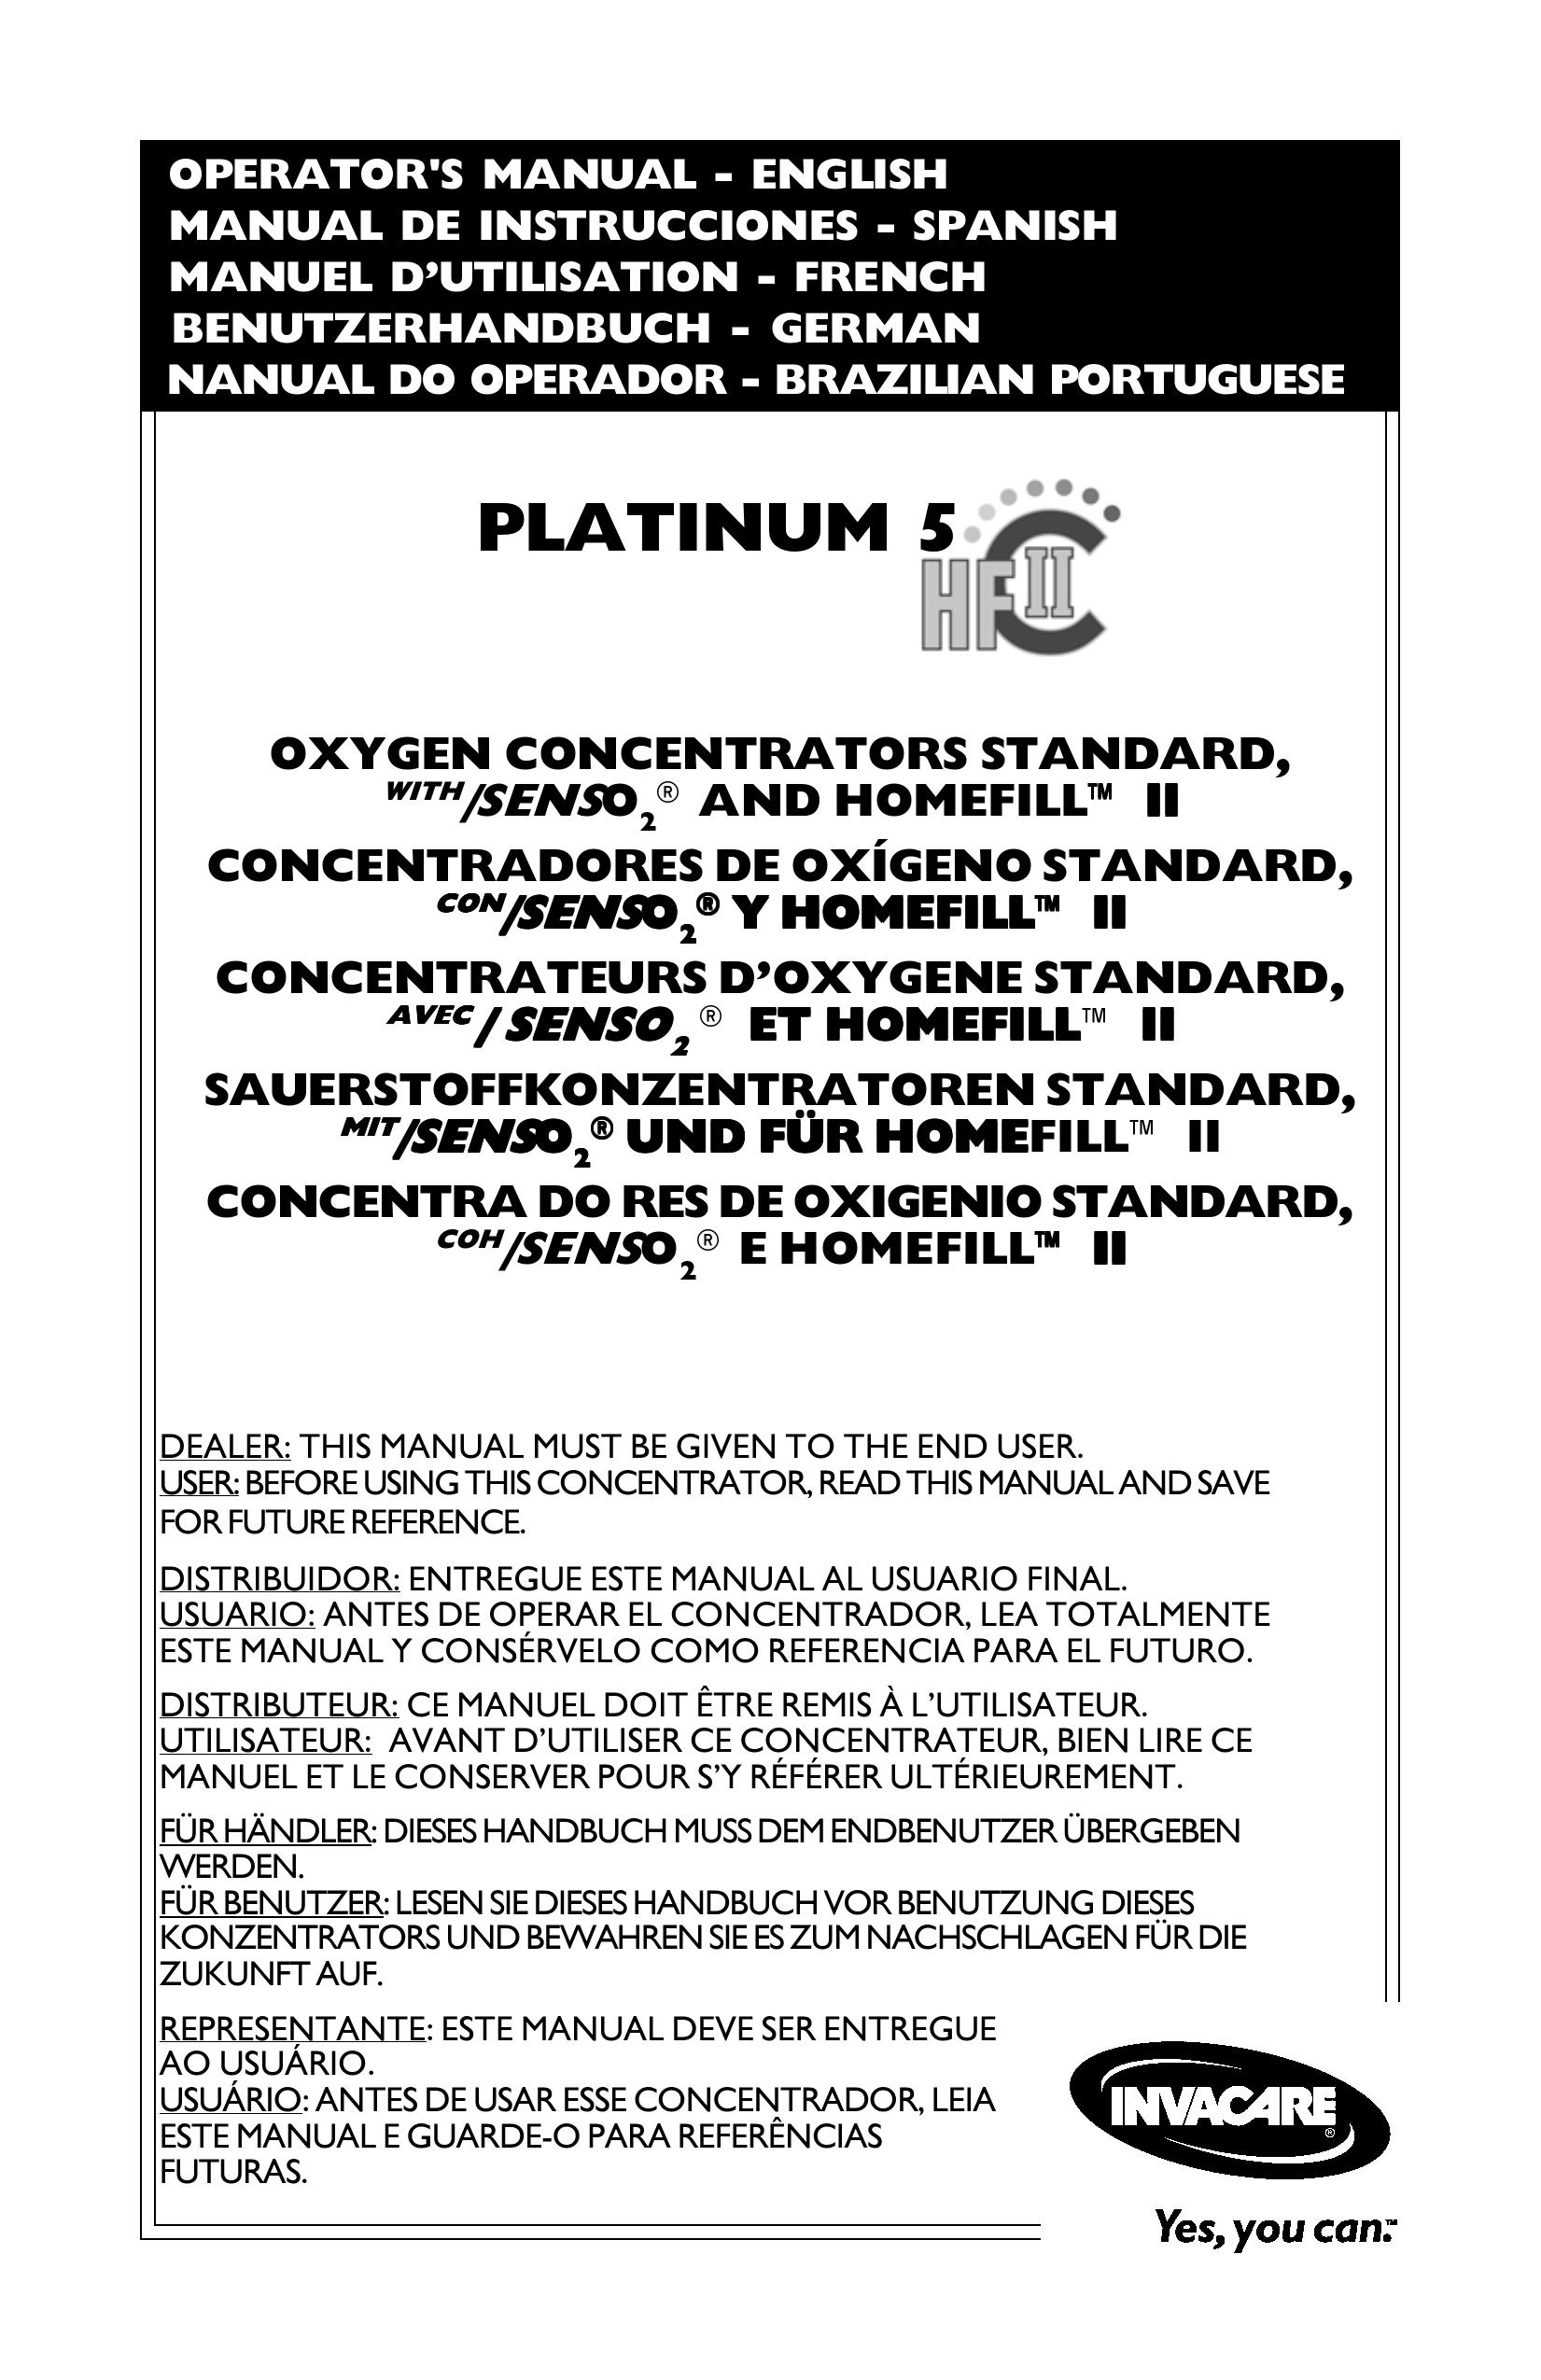 Invacare PLATINUM 5 Respiratory Product User Manual